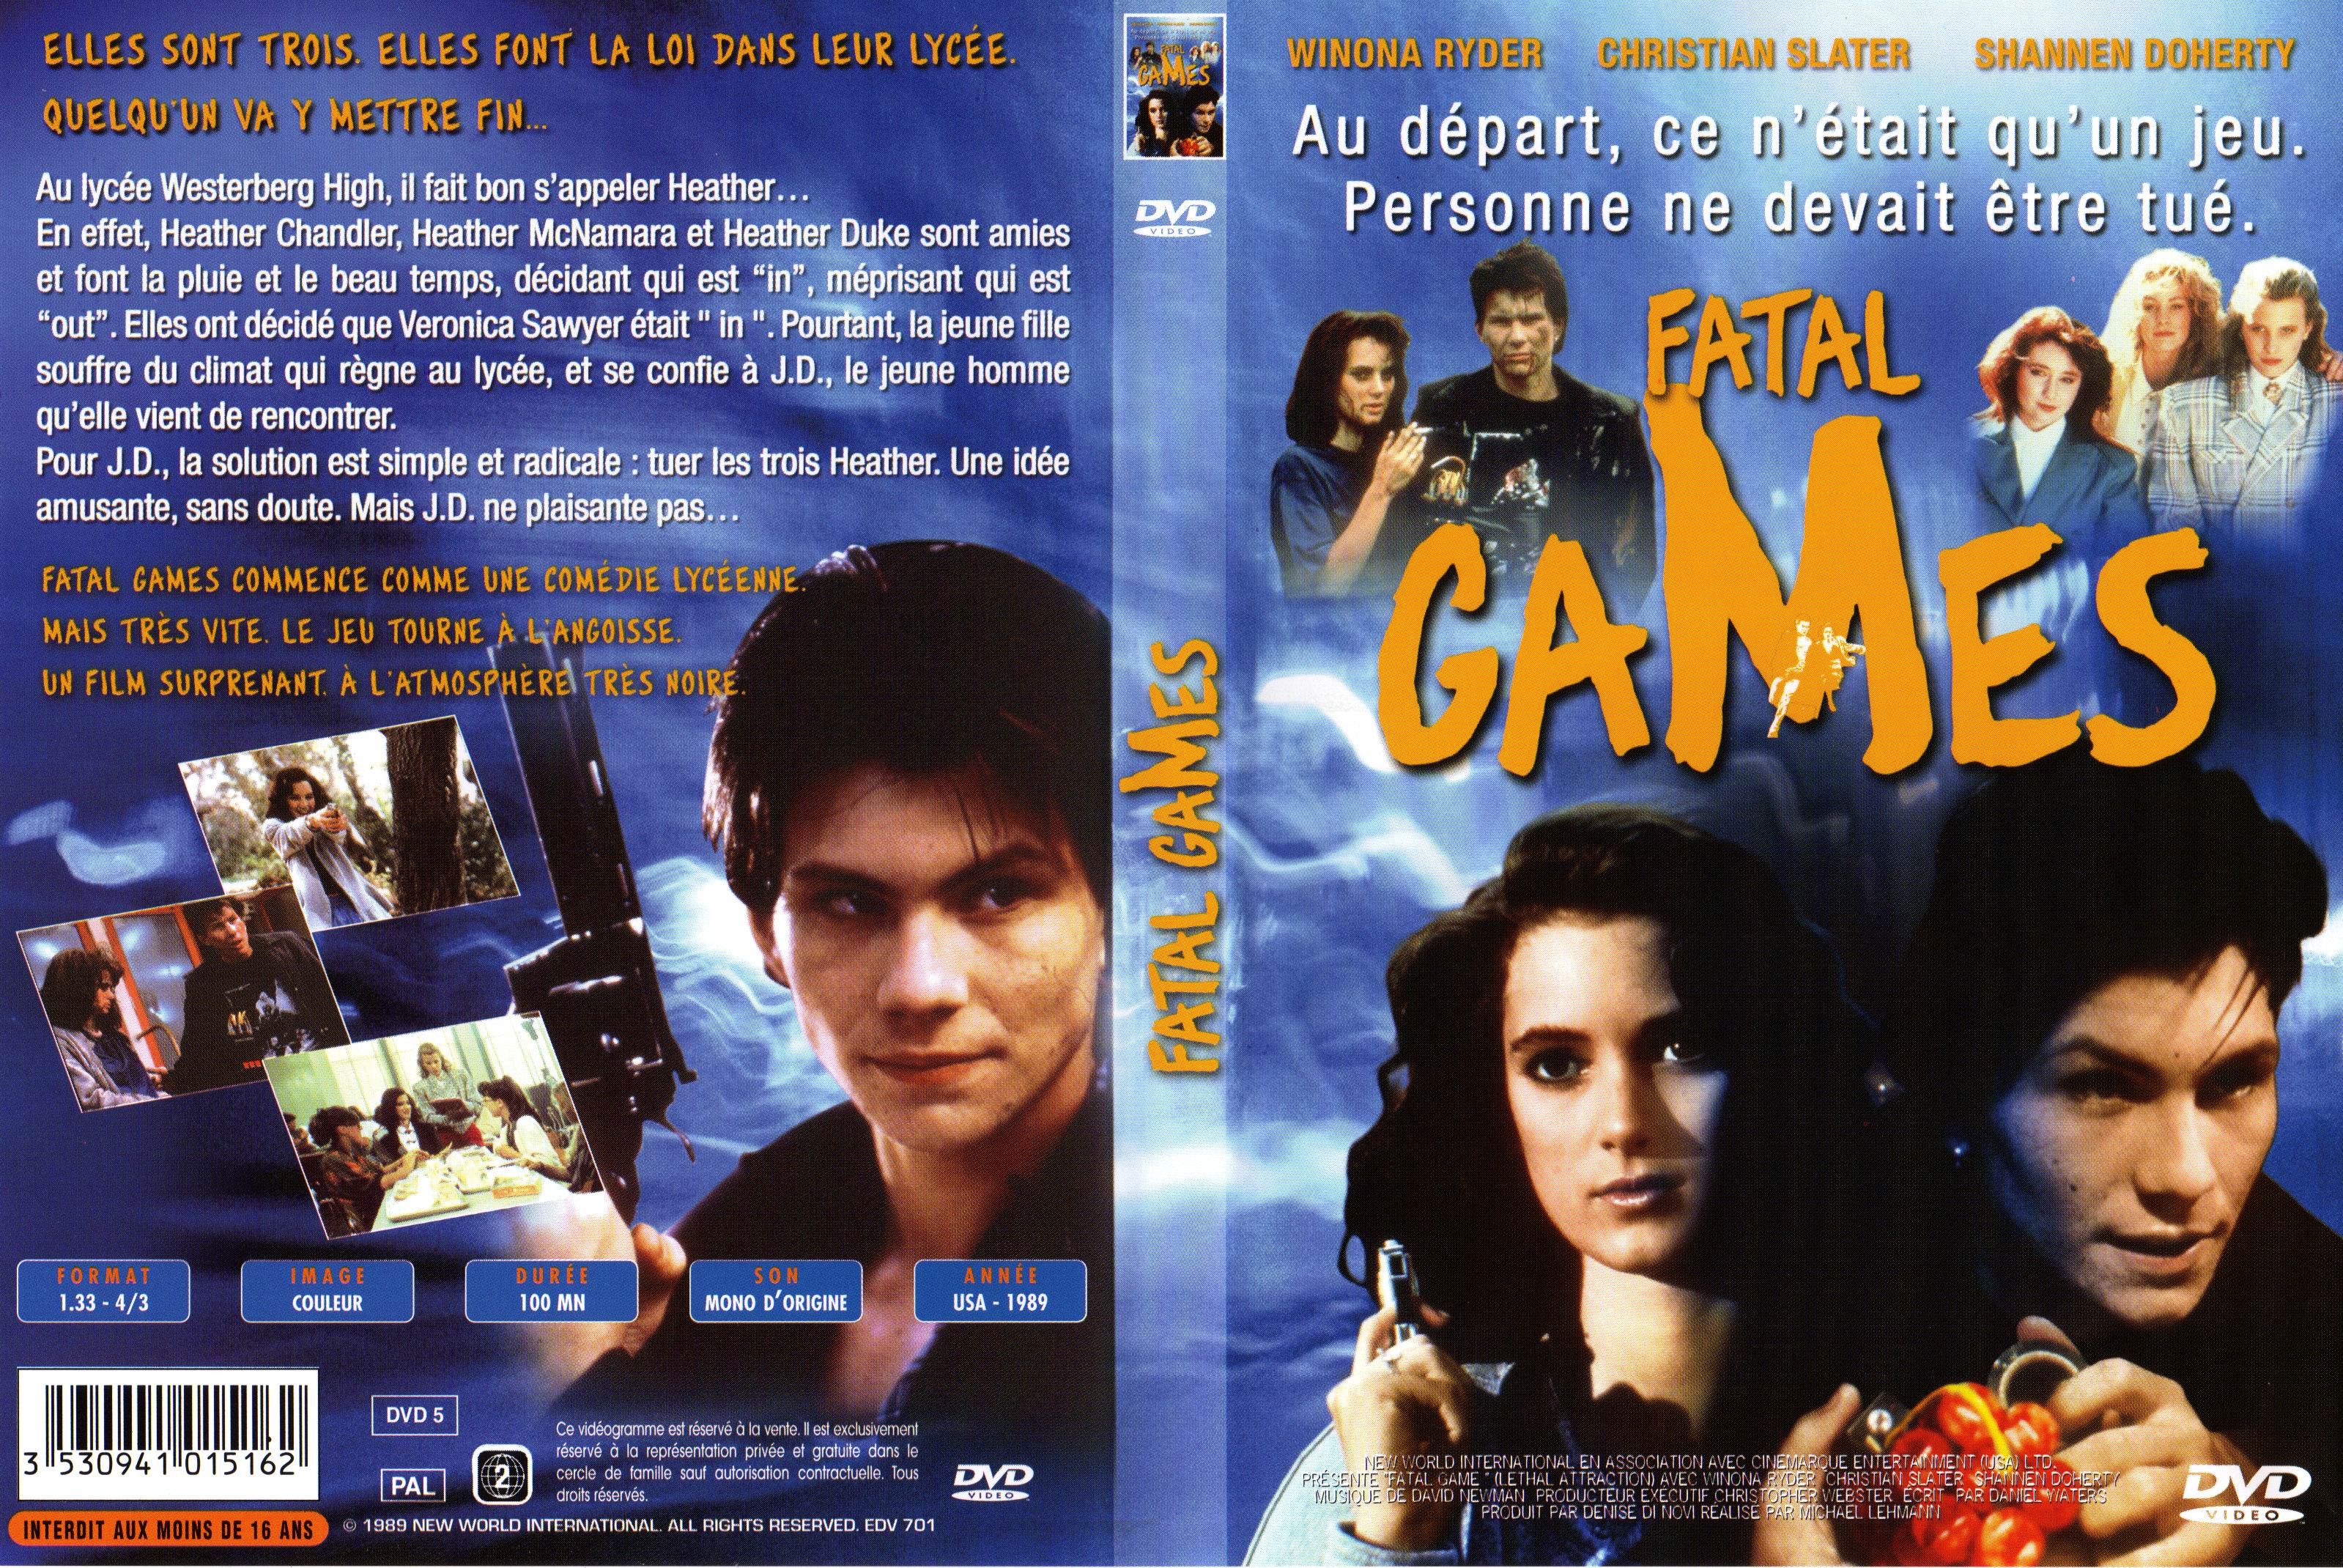 Jaquette DVD Fatal games